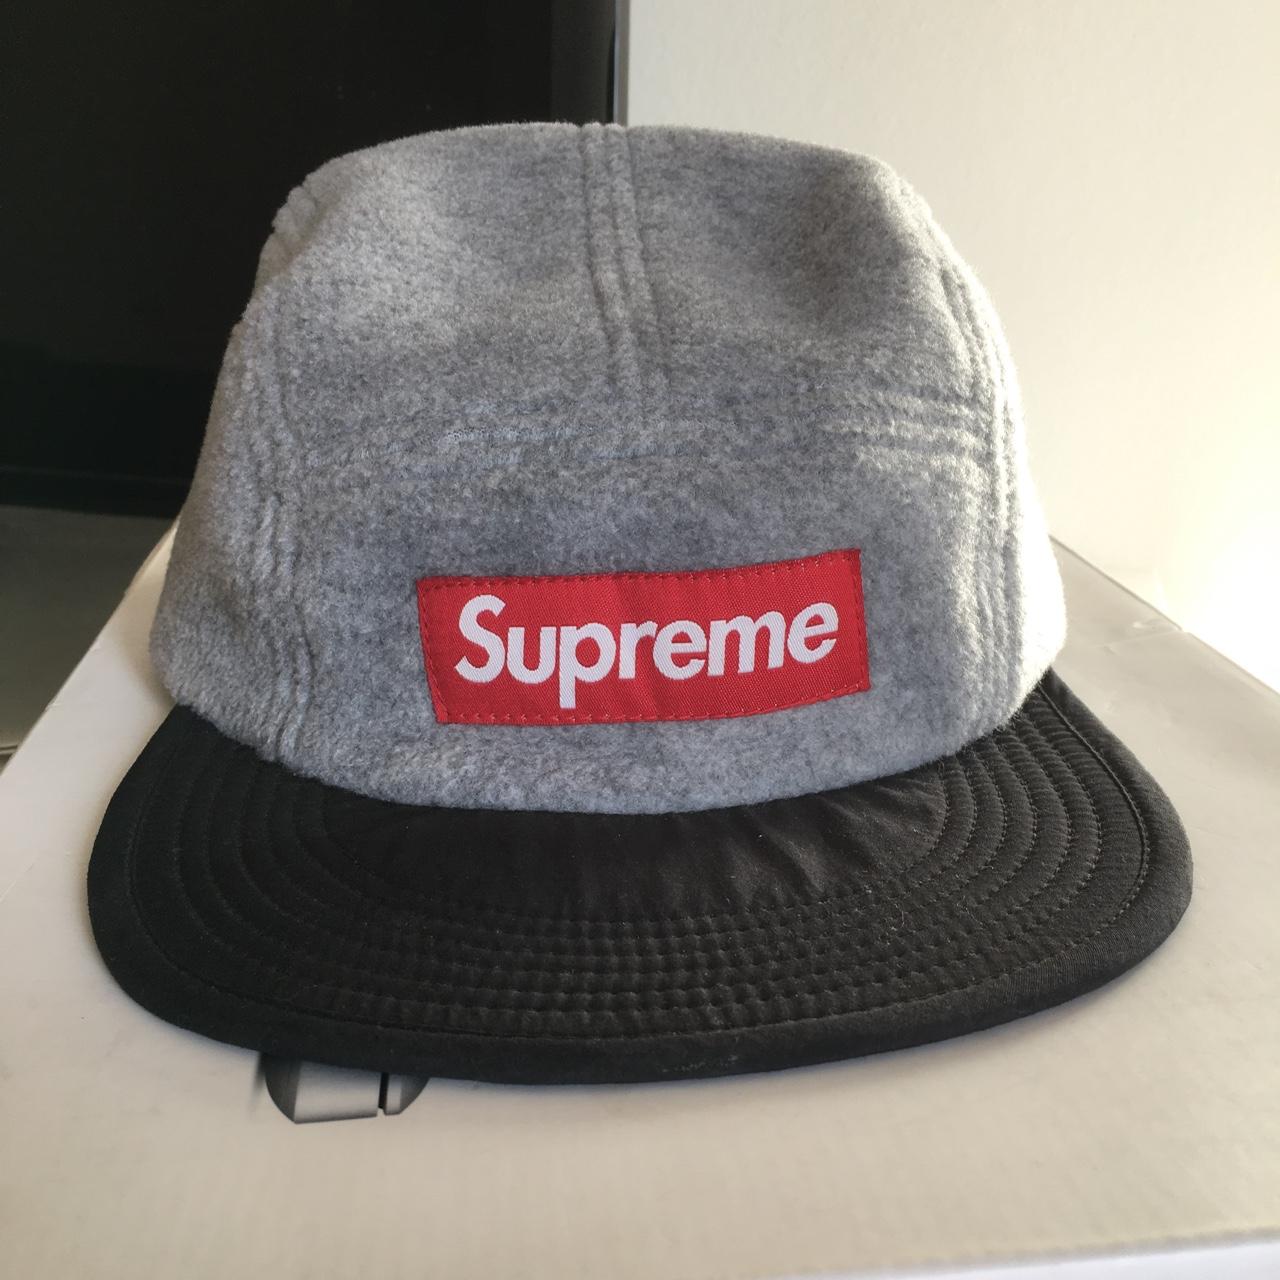 Supreme Men's Hat - Grey